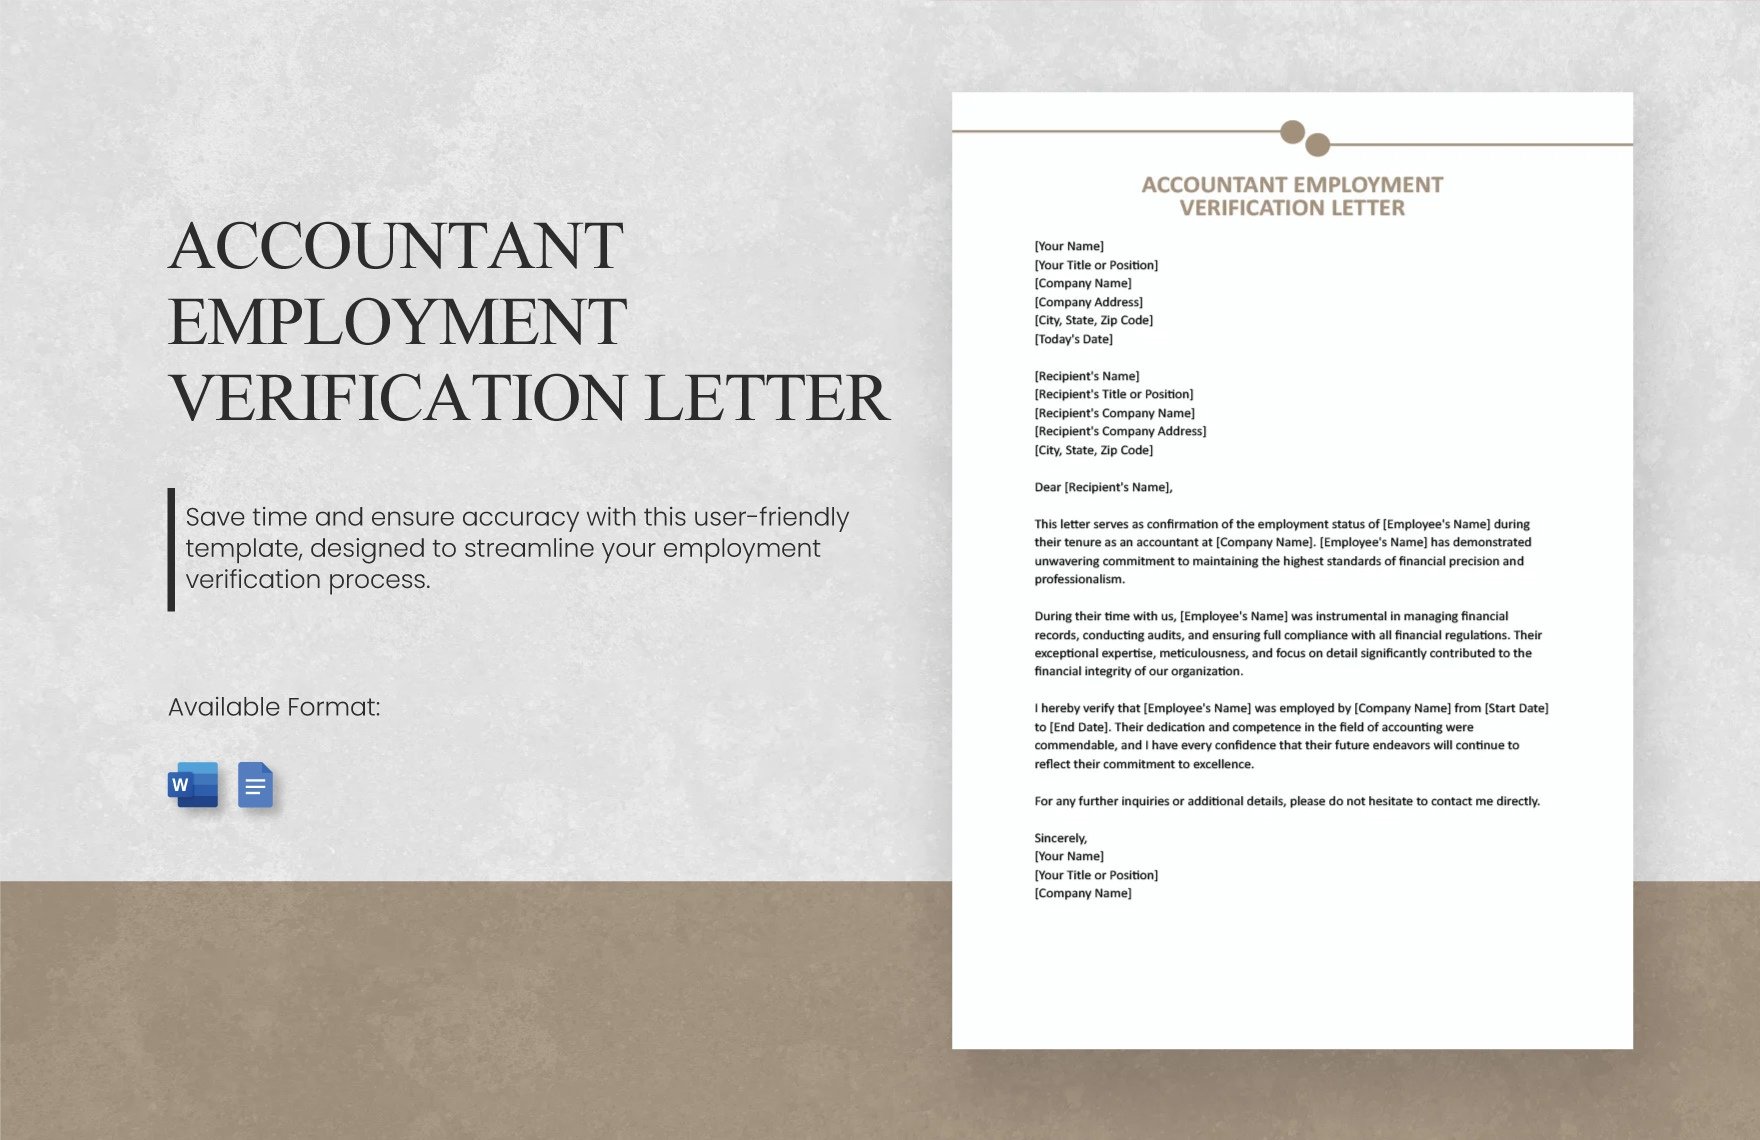 Free Accountant Employment Verification Letter